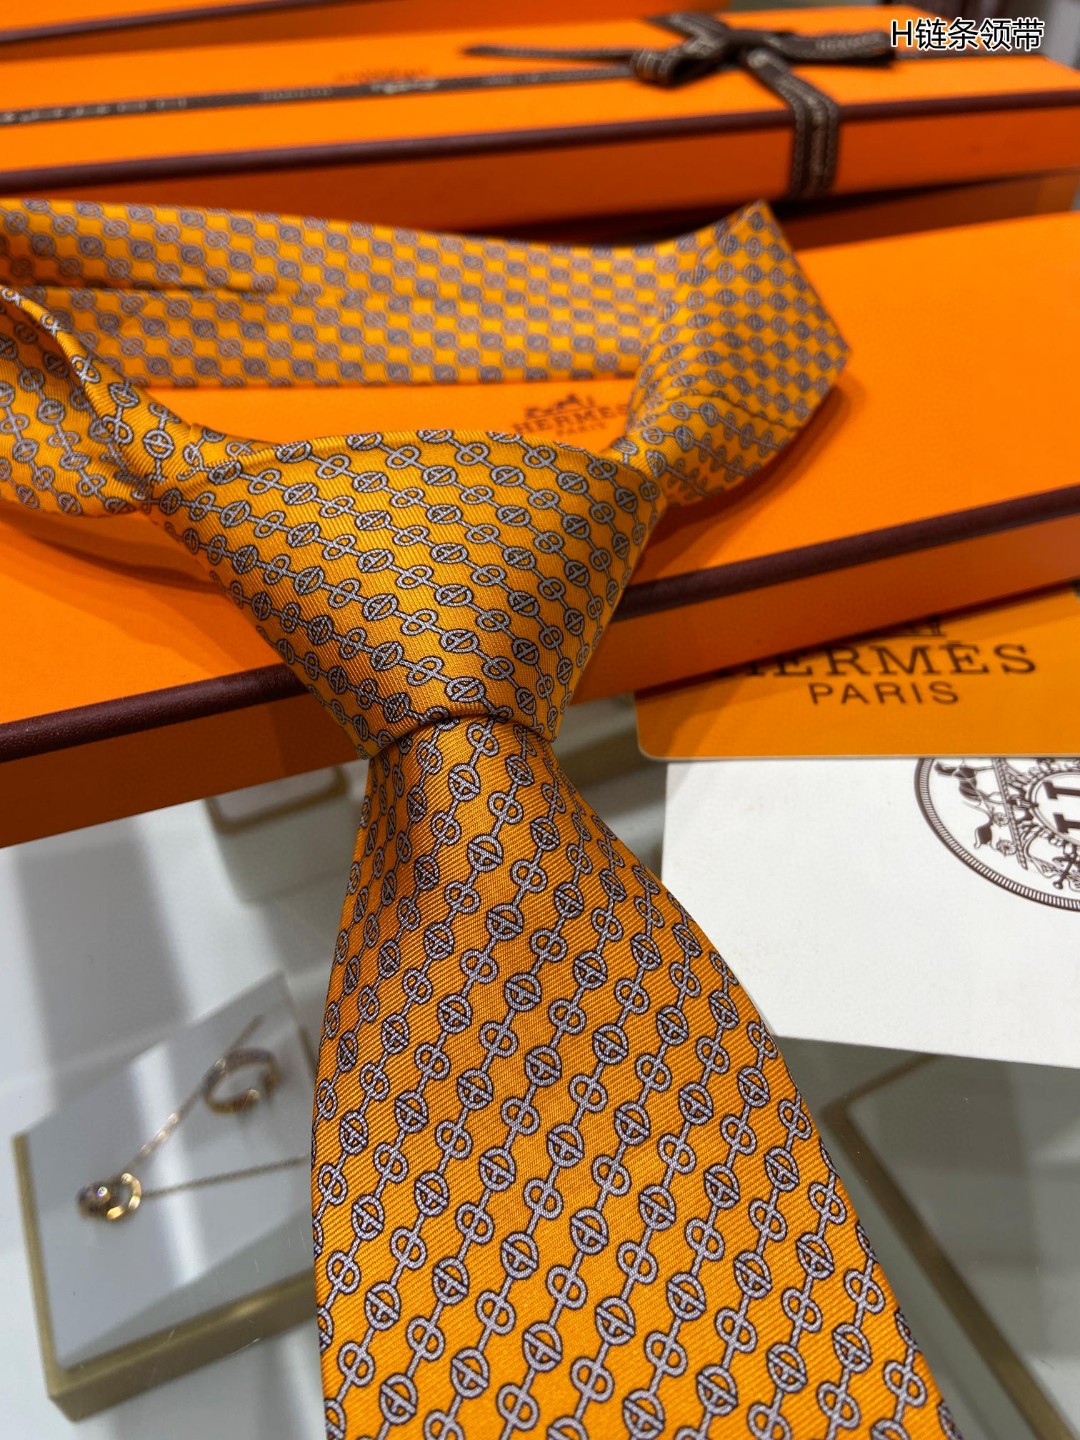 Hermes爱马仕100%顶级斜纹真丝链条领带